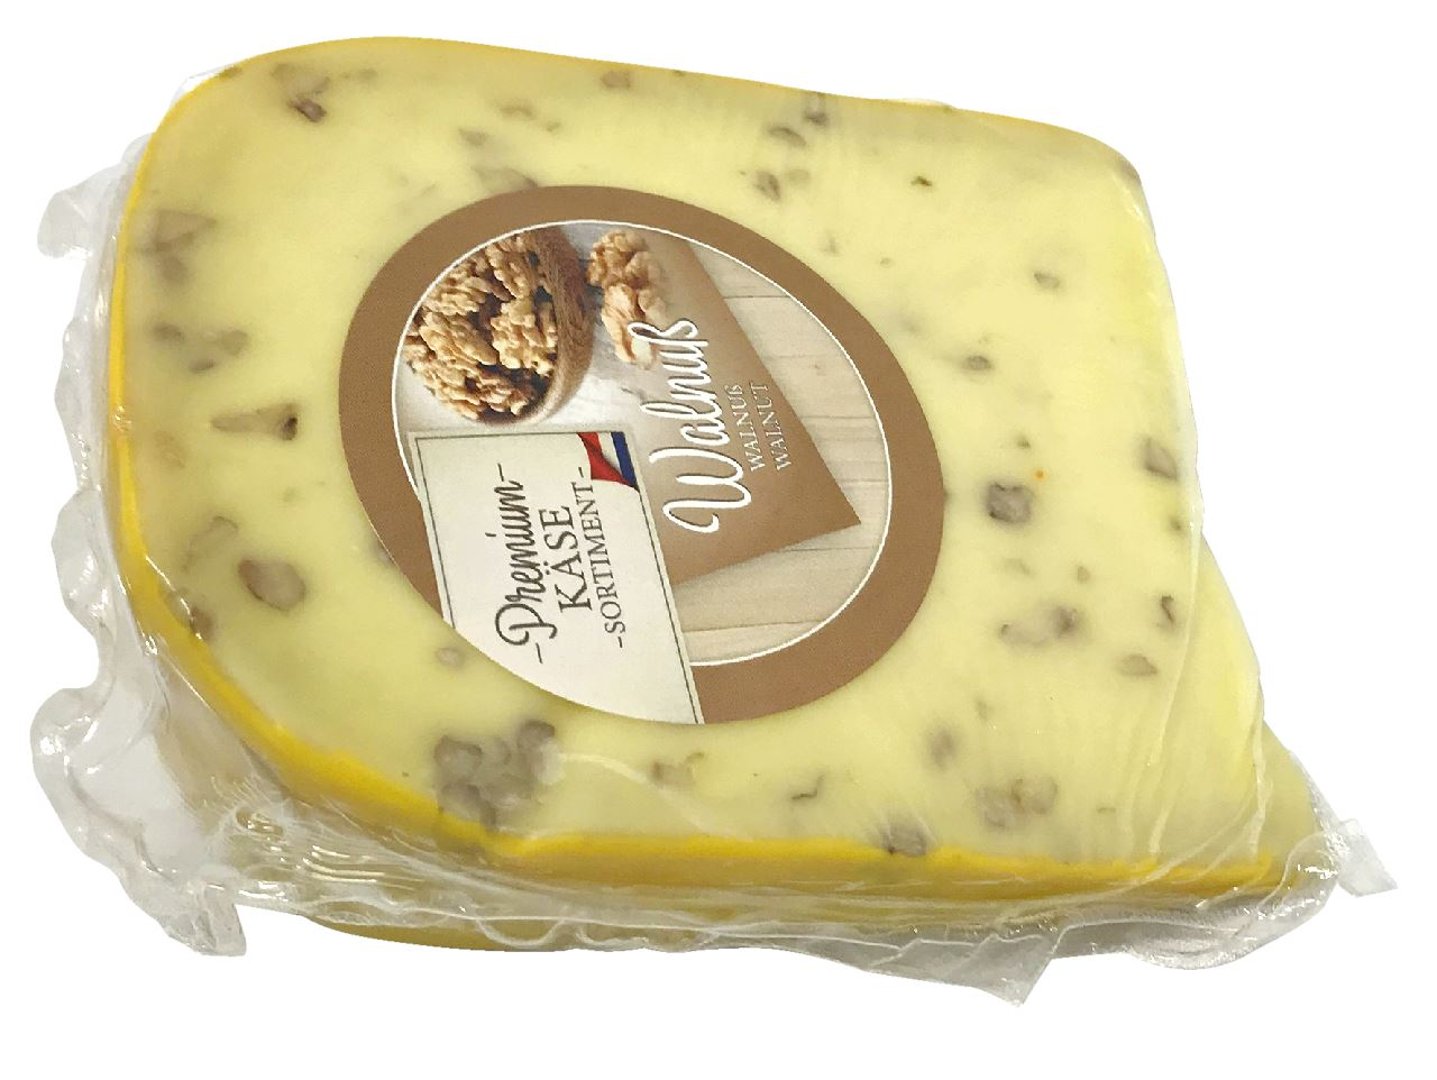 Delina - Gouda Käse Stück mit Walnuss 50 % Fett i.Tr. gekühlt - 250 g Packung